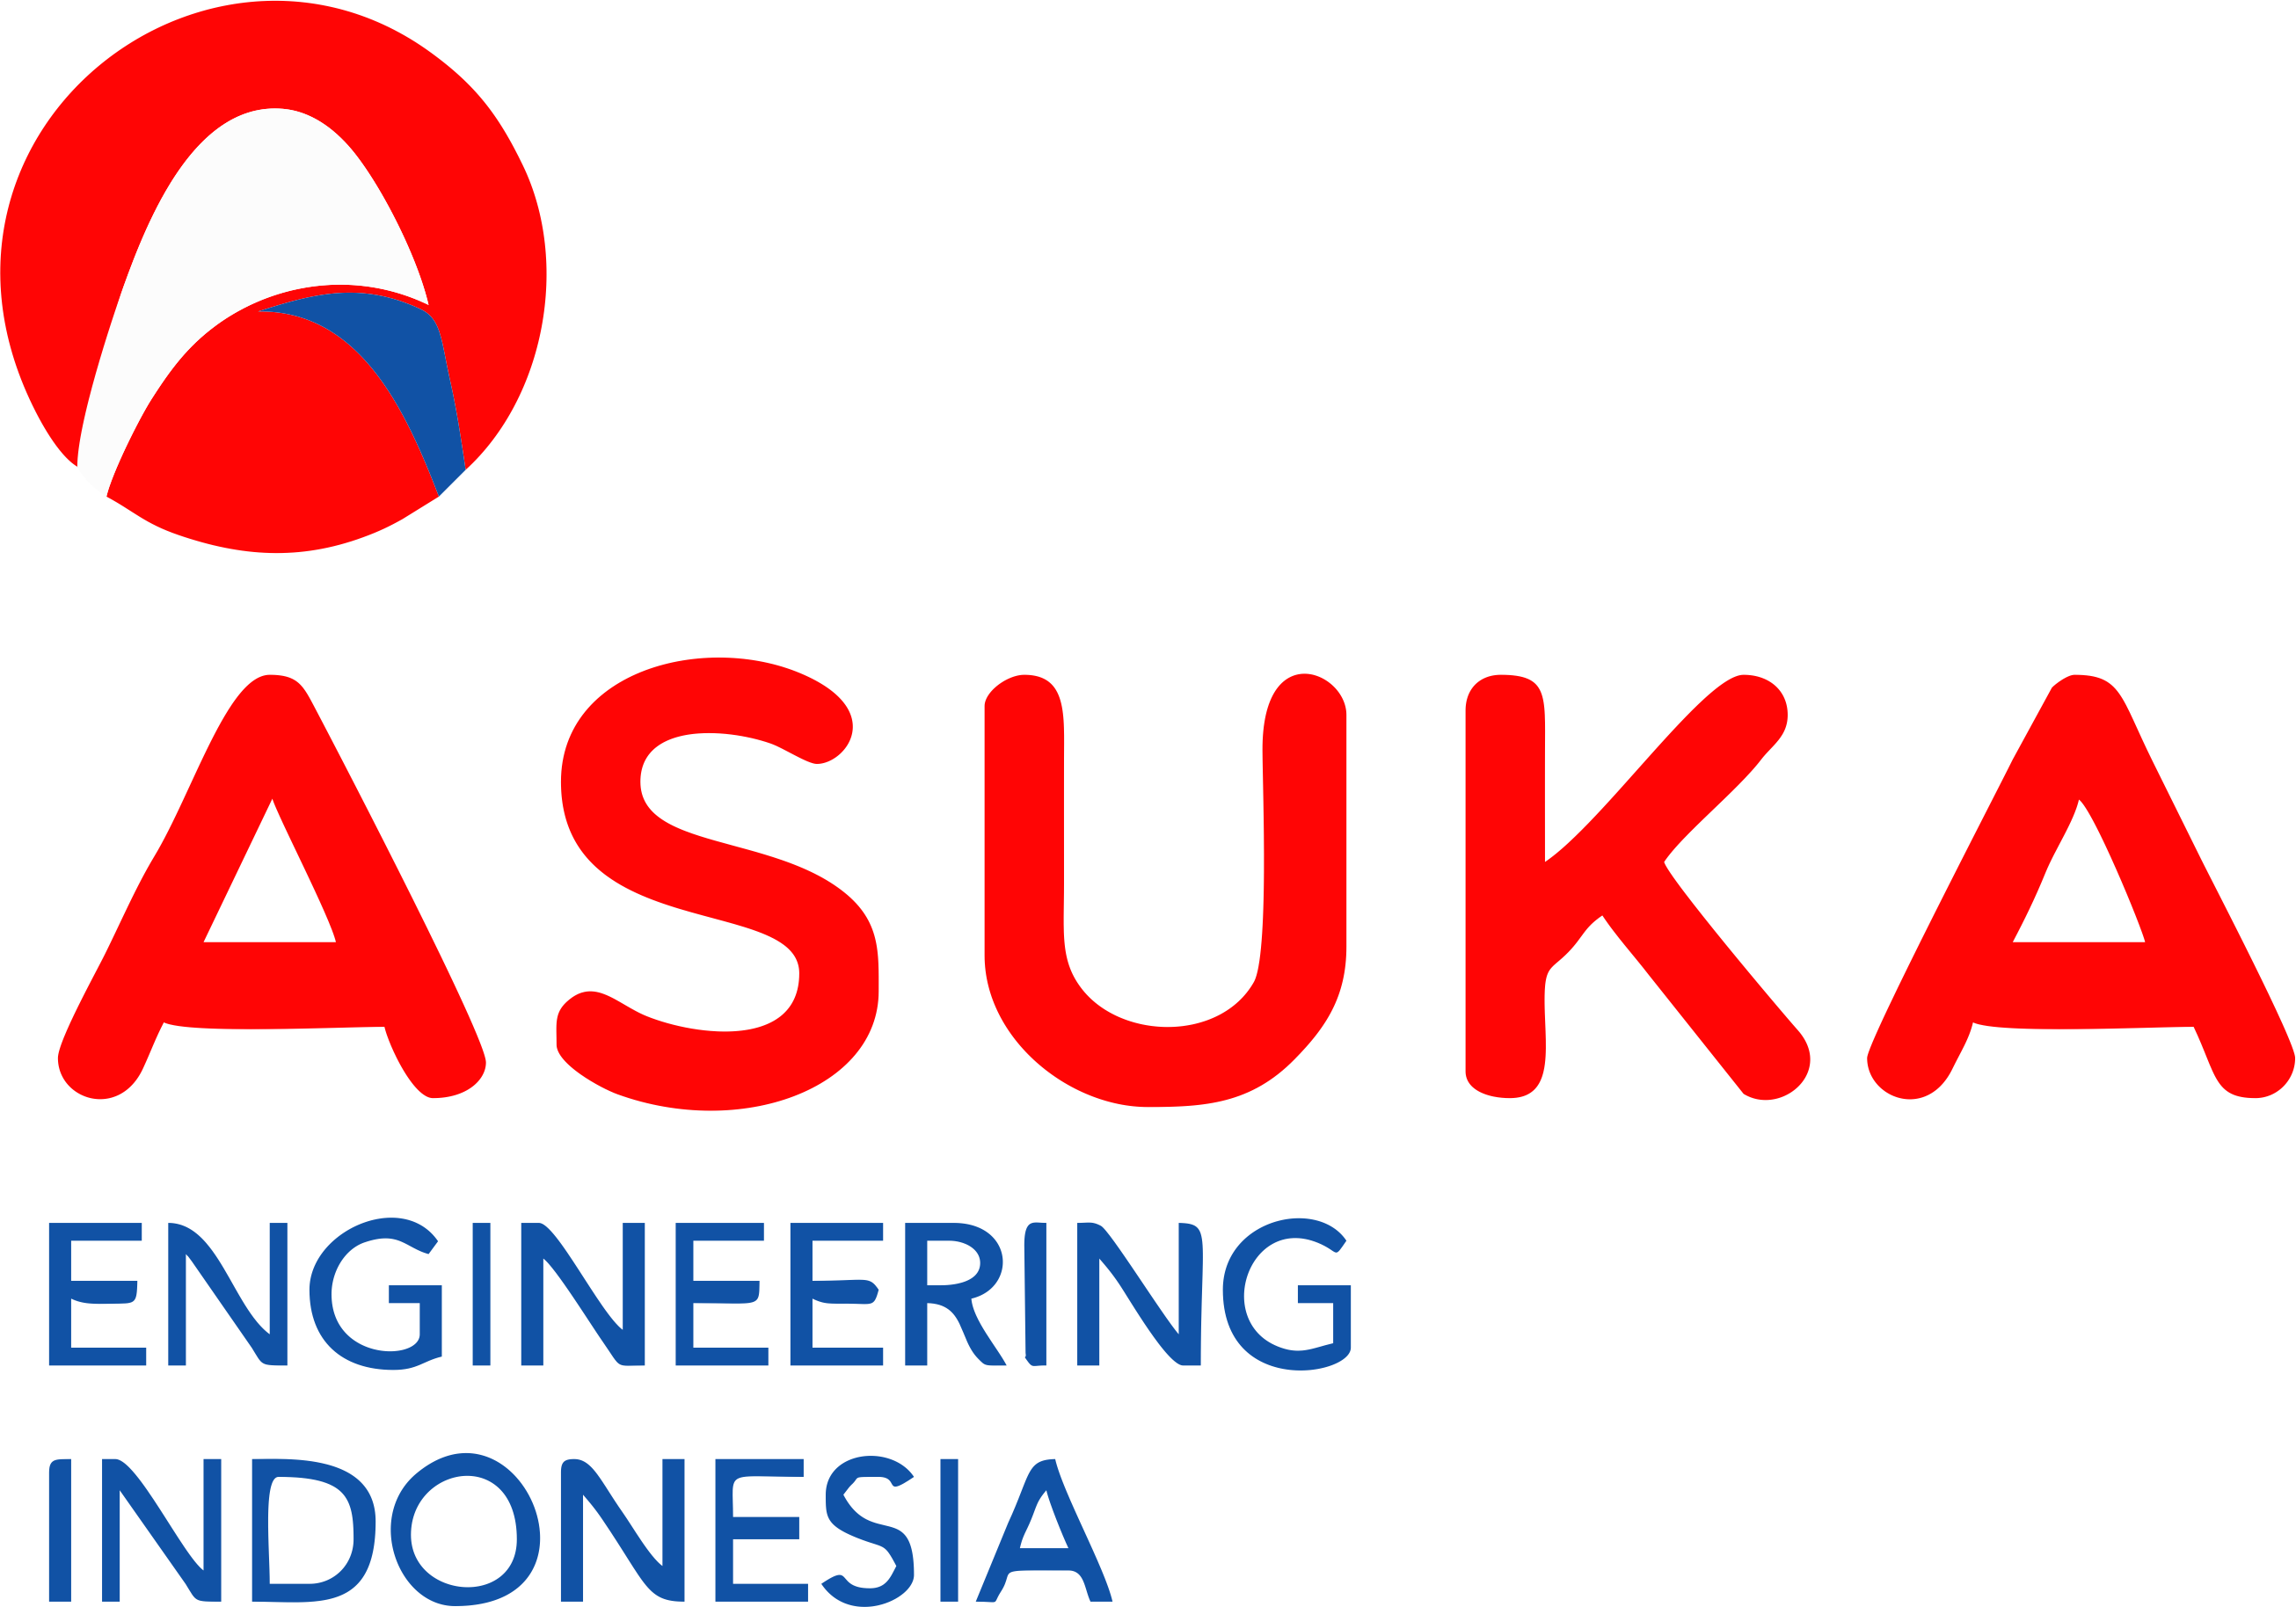 Asuka Engineering Indonesia